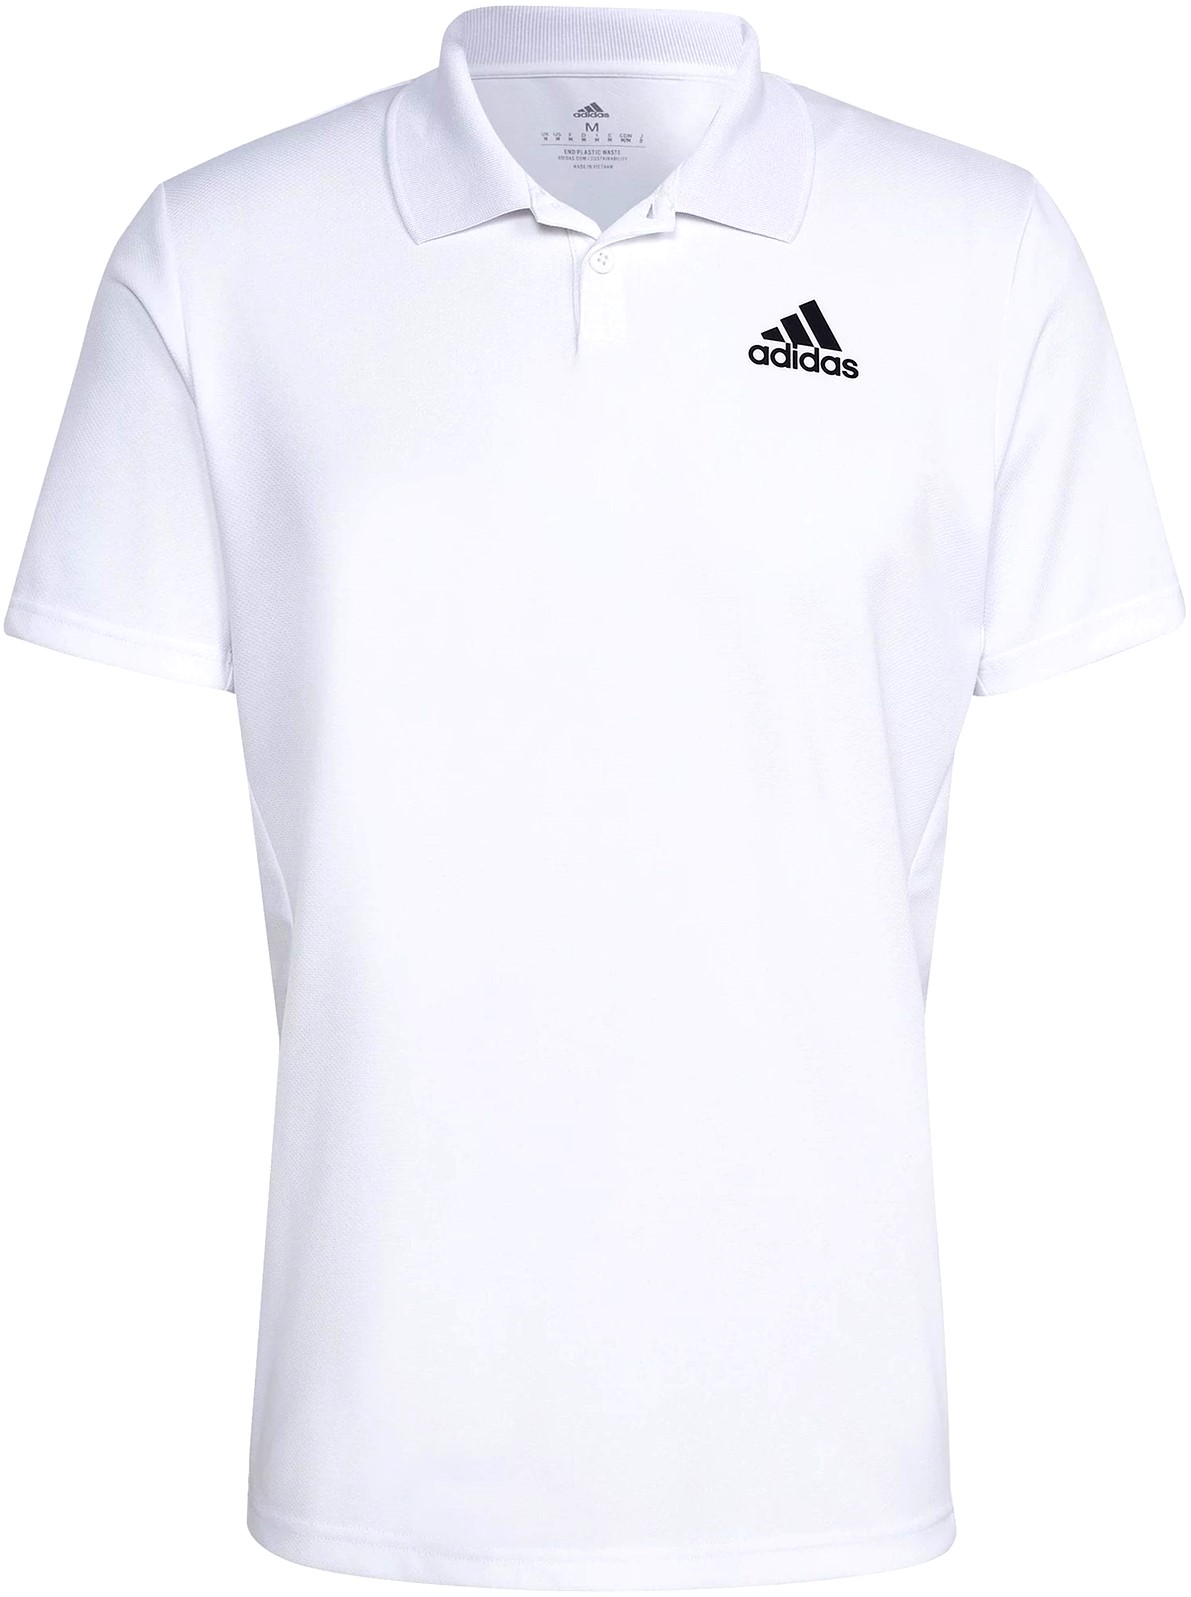 Adidas Men's Club Pique Tennis Polo (White)